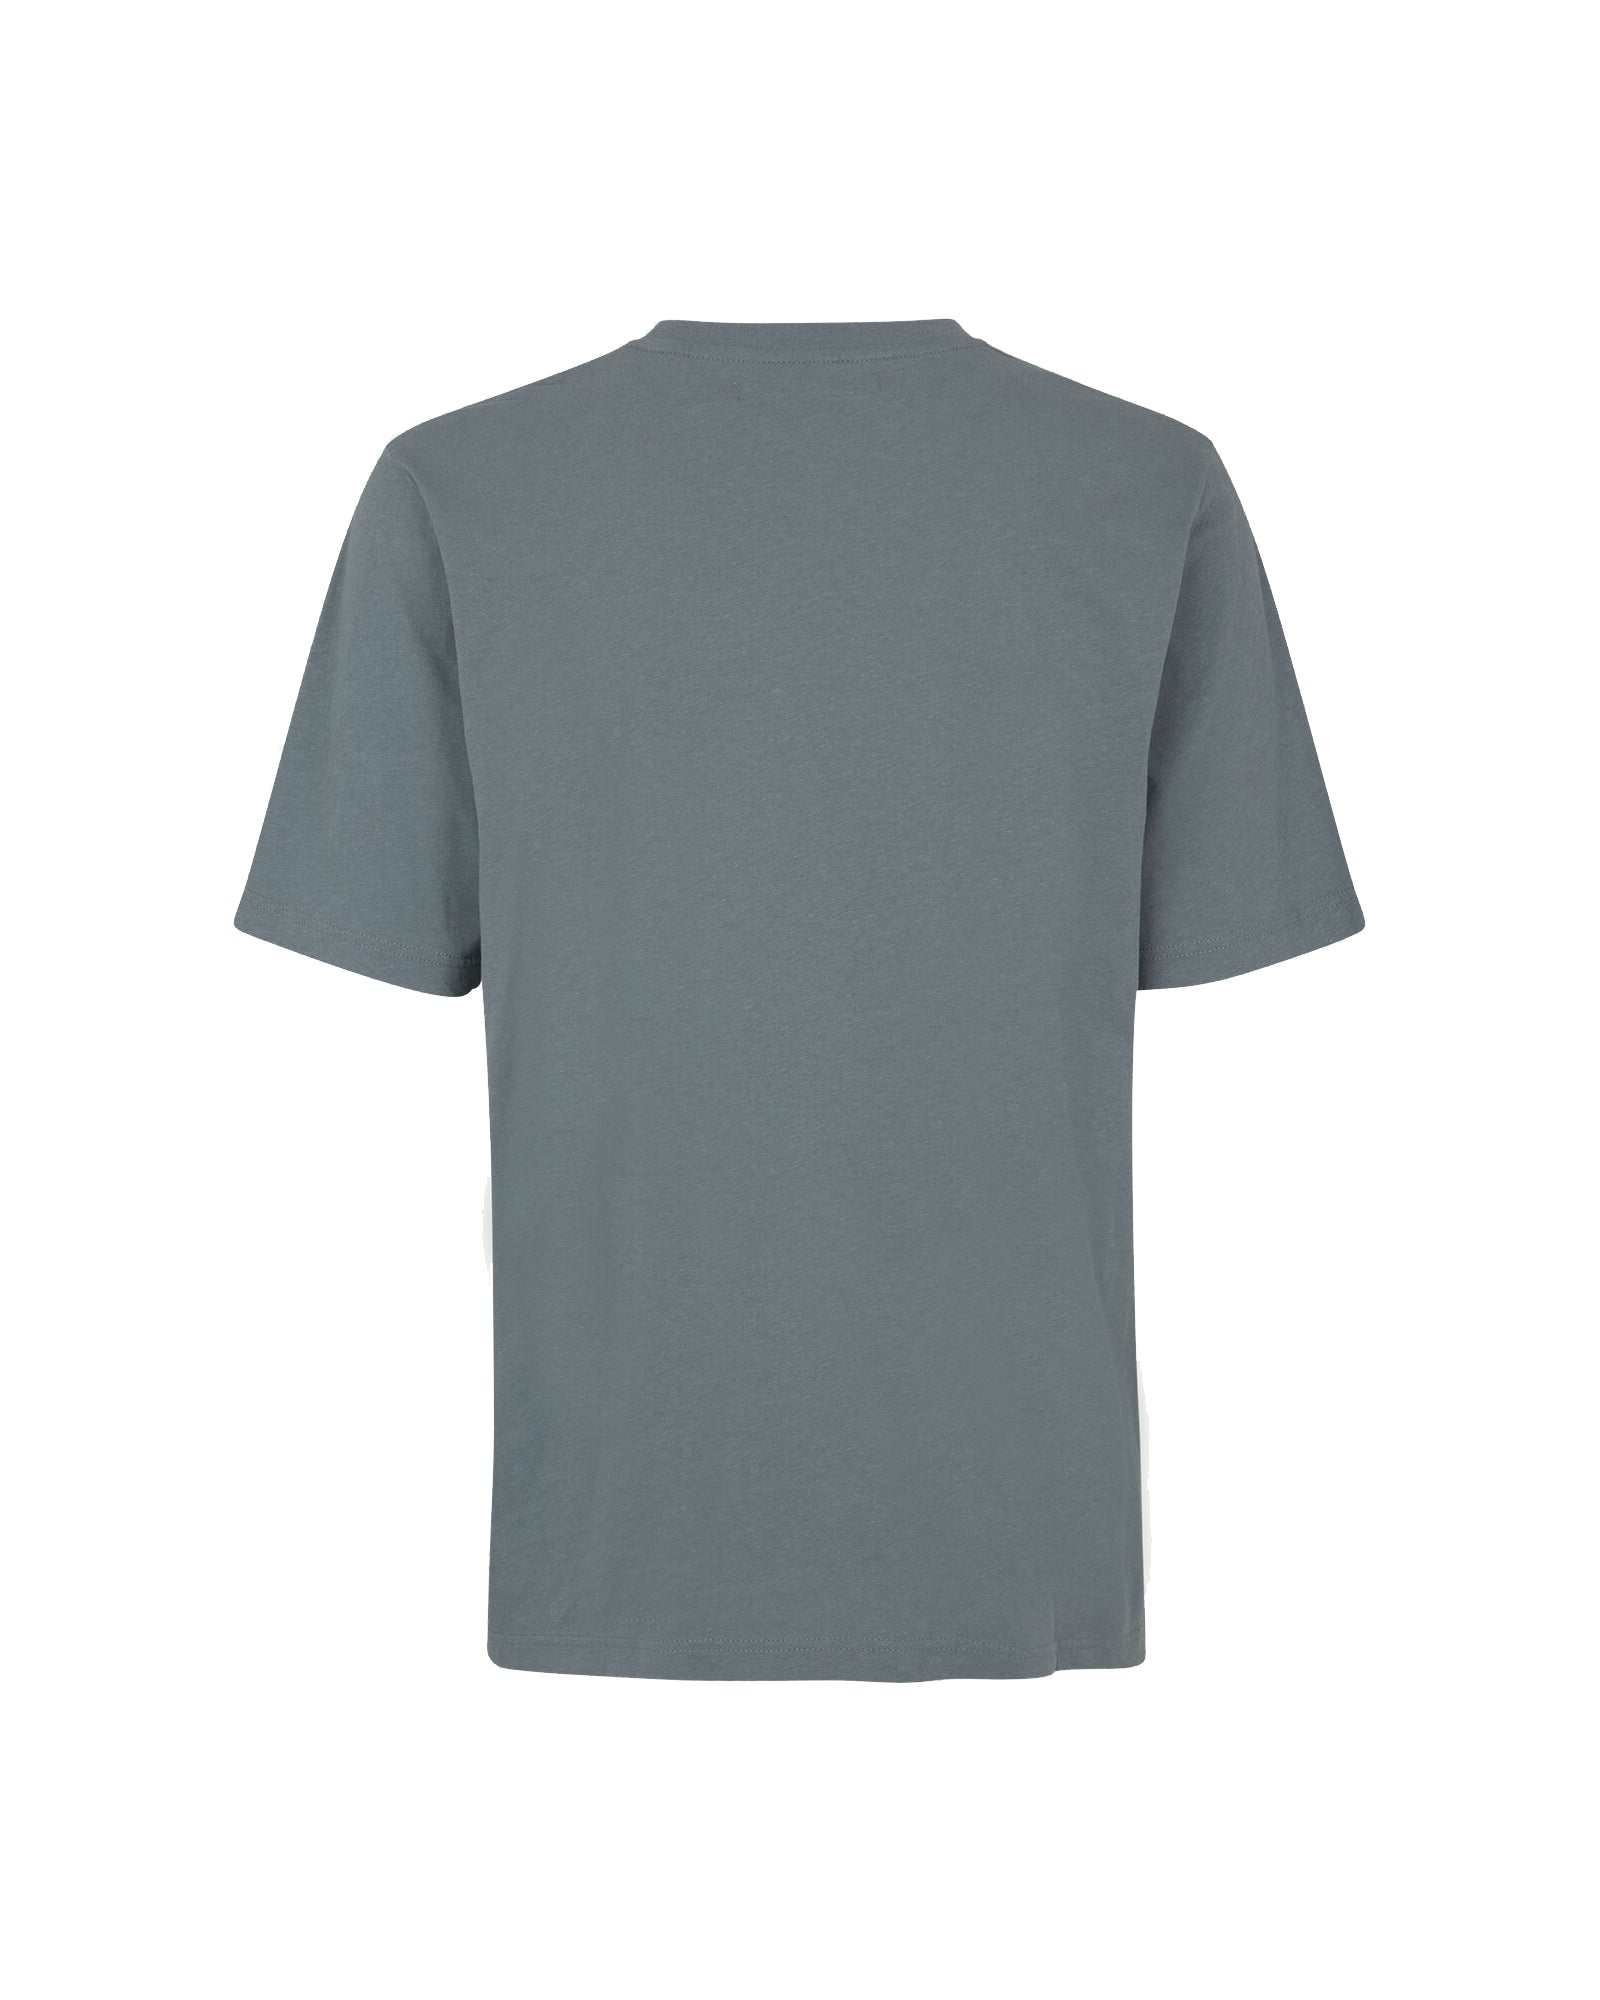 Saadrian 15099 t-shirt - Sedona Sage